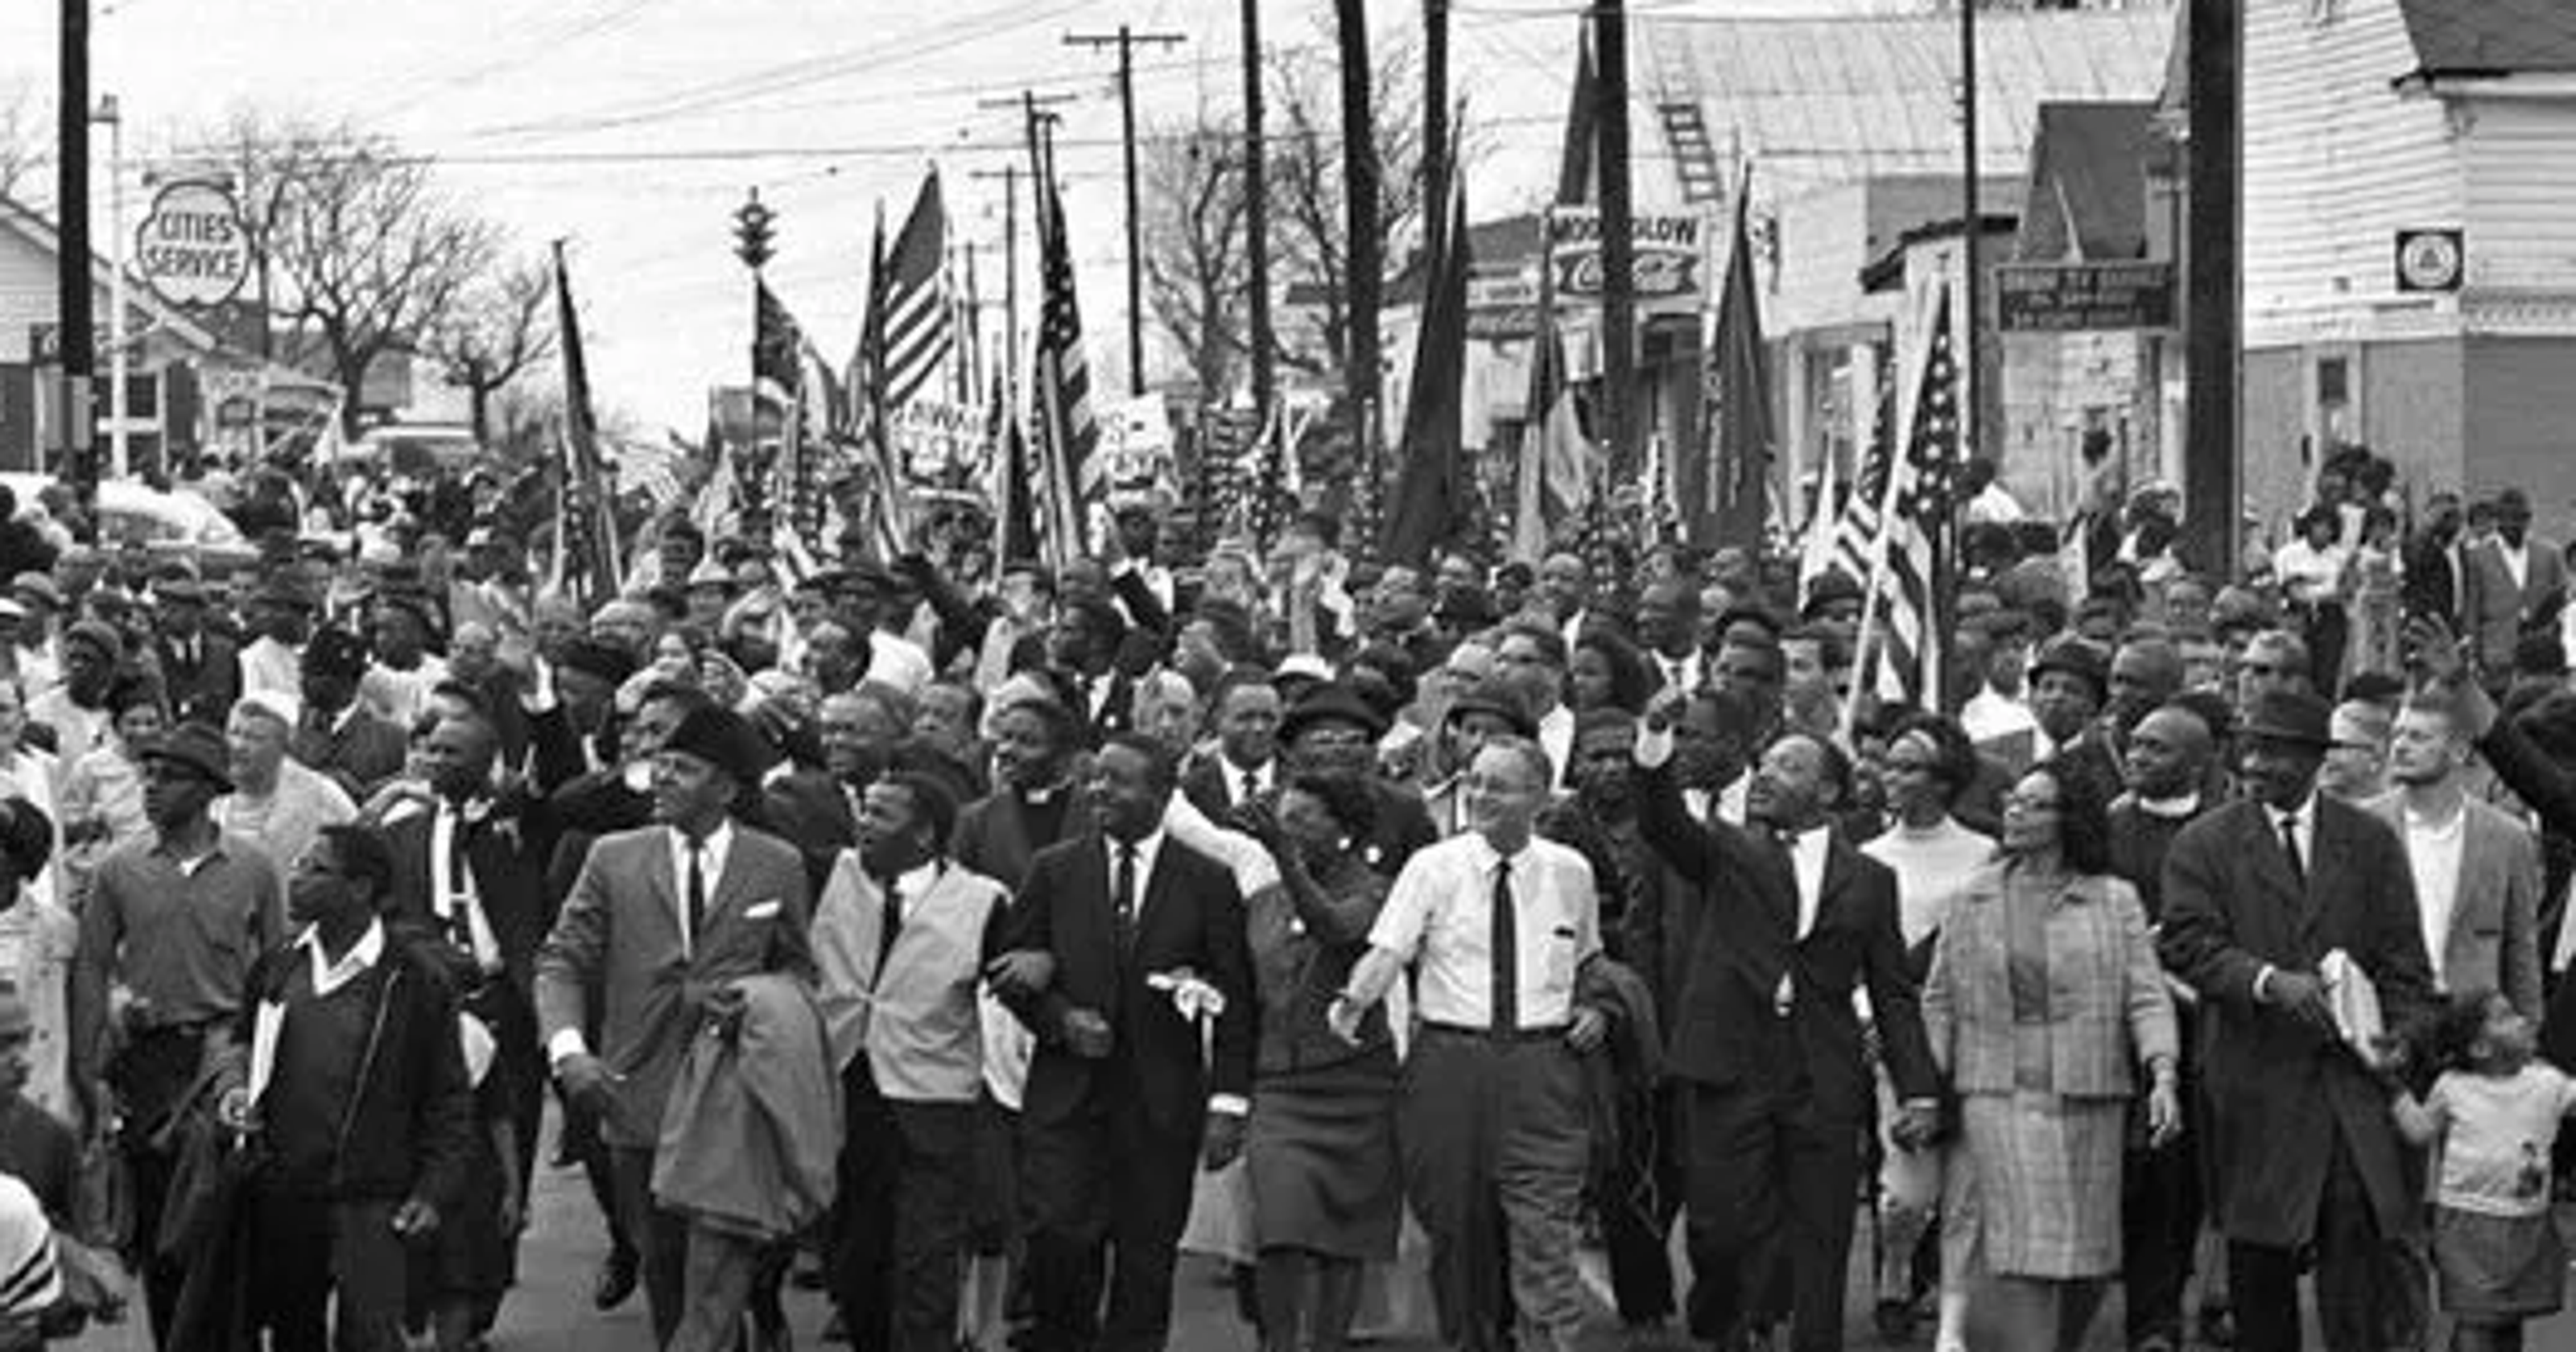 Selma To Montgomery March Speech Analysis